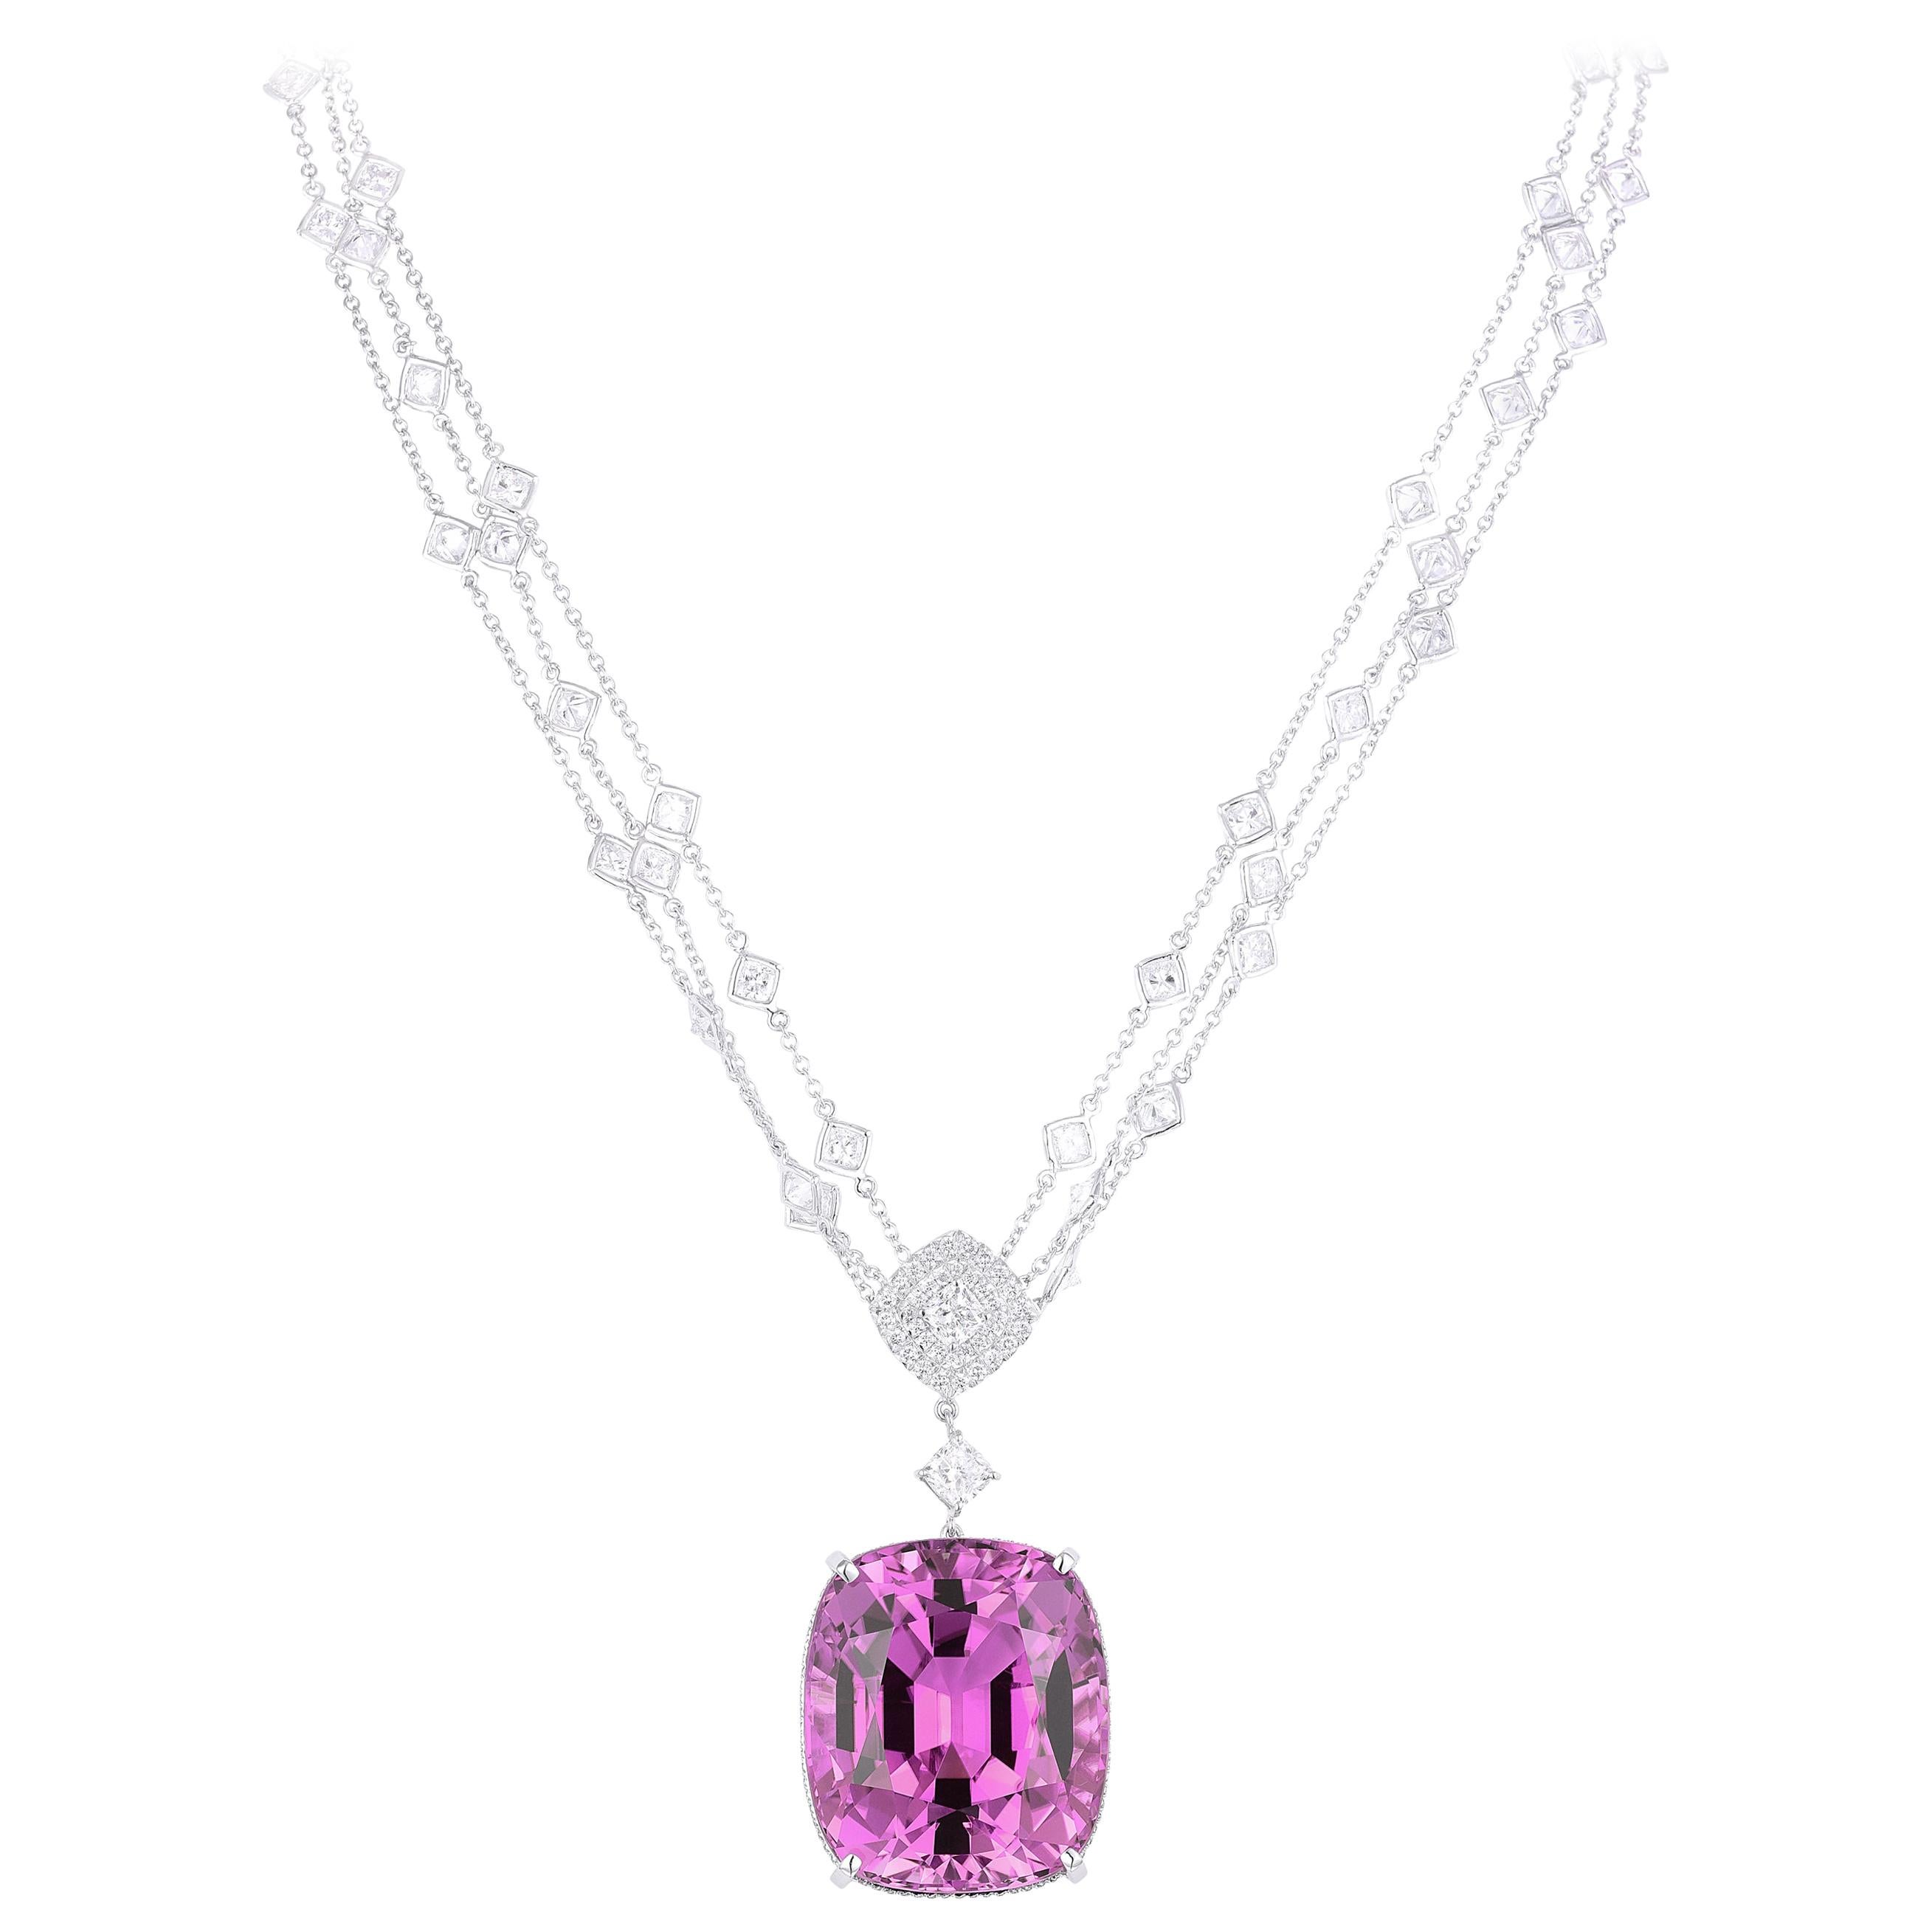 Important 100 Carat Kunzite Diamond Necklace